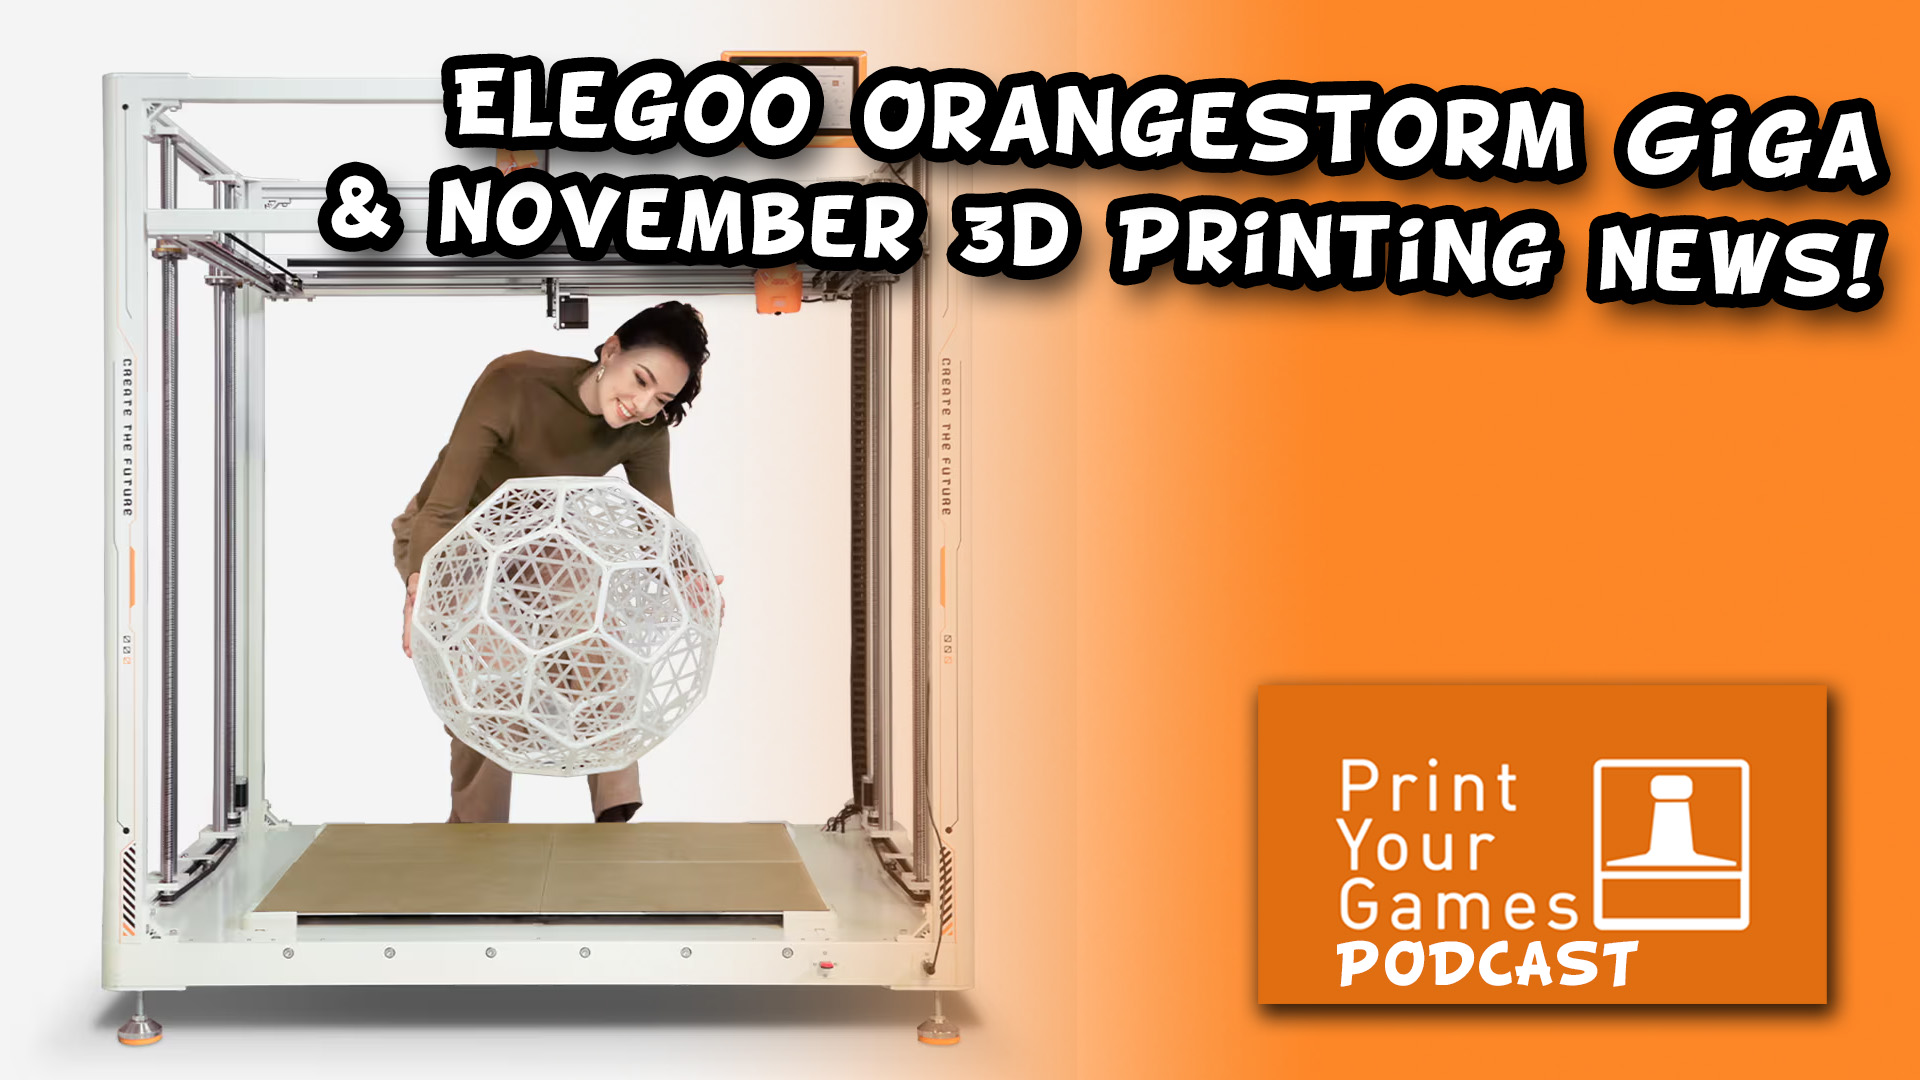 Elegoo OrgangeStorm Giga & Black Friday Sales – November 3D Printing News –  Print Your Games